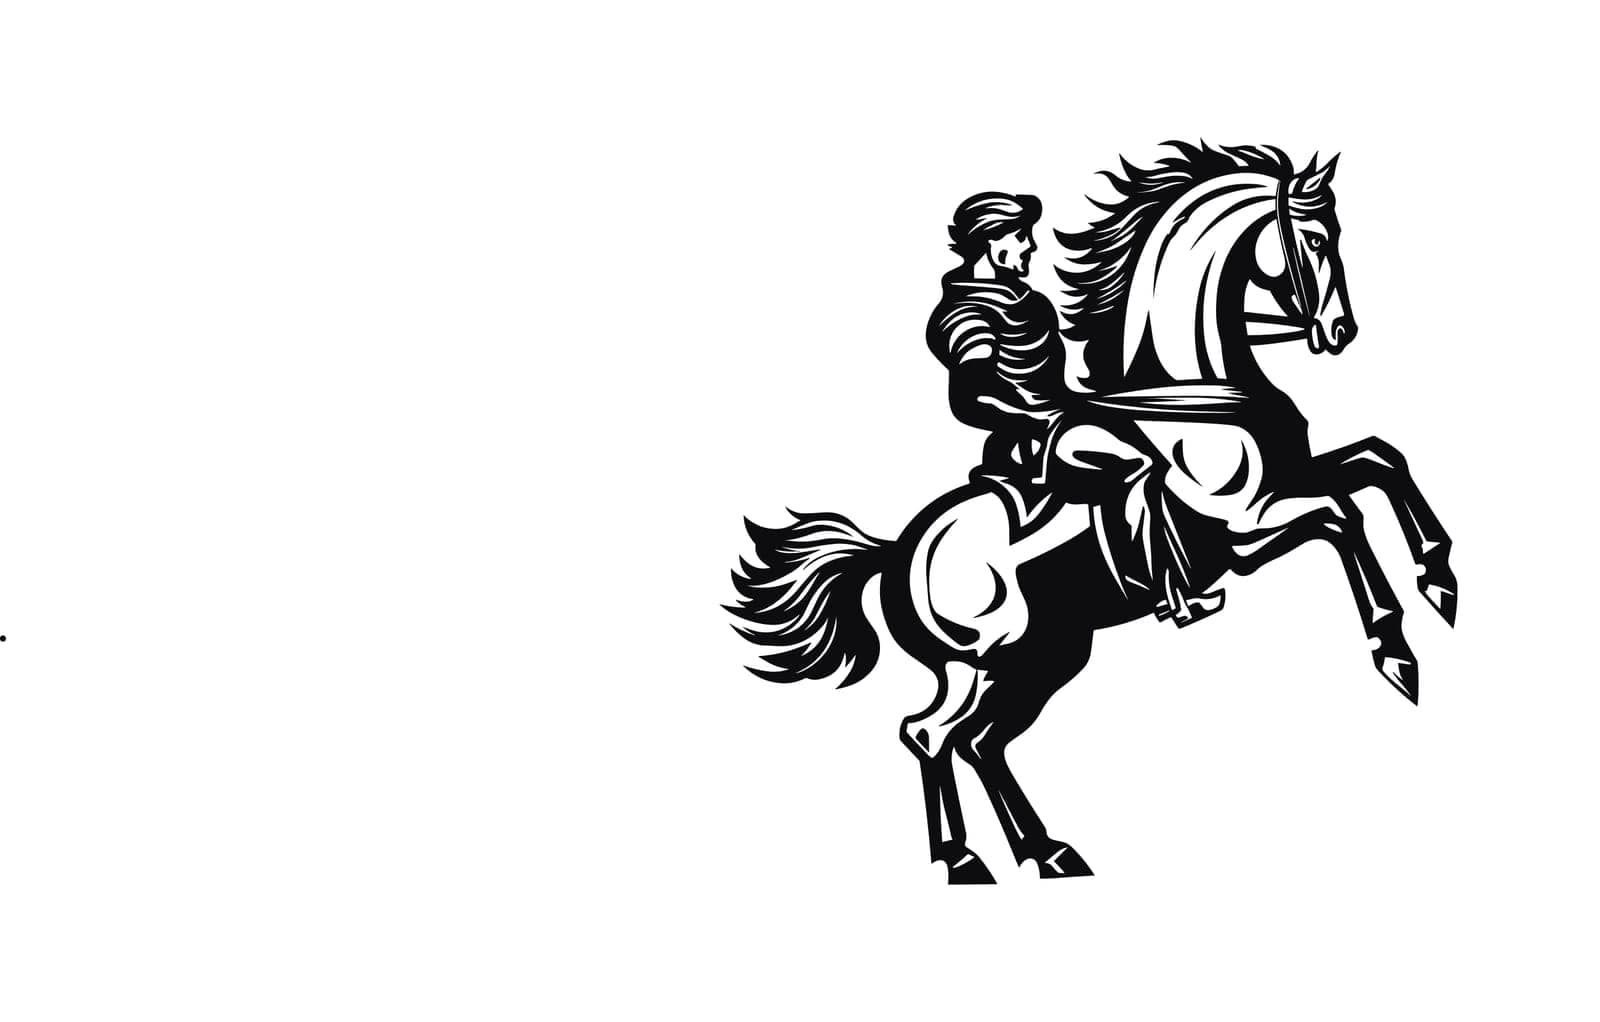 man riding a horse silhouette